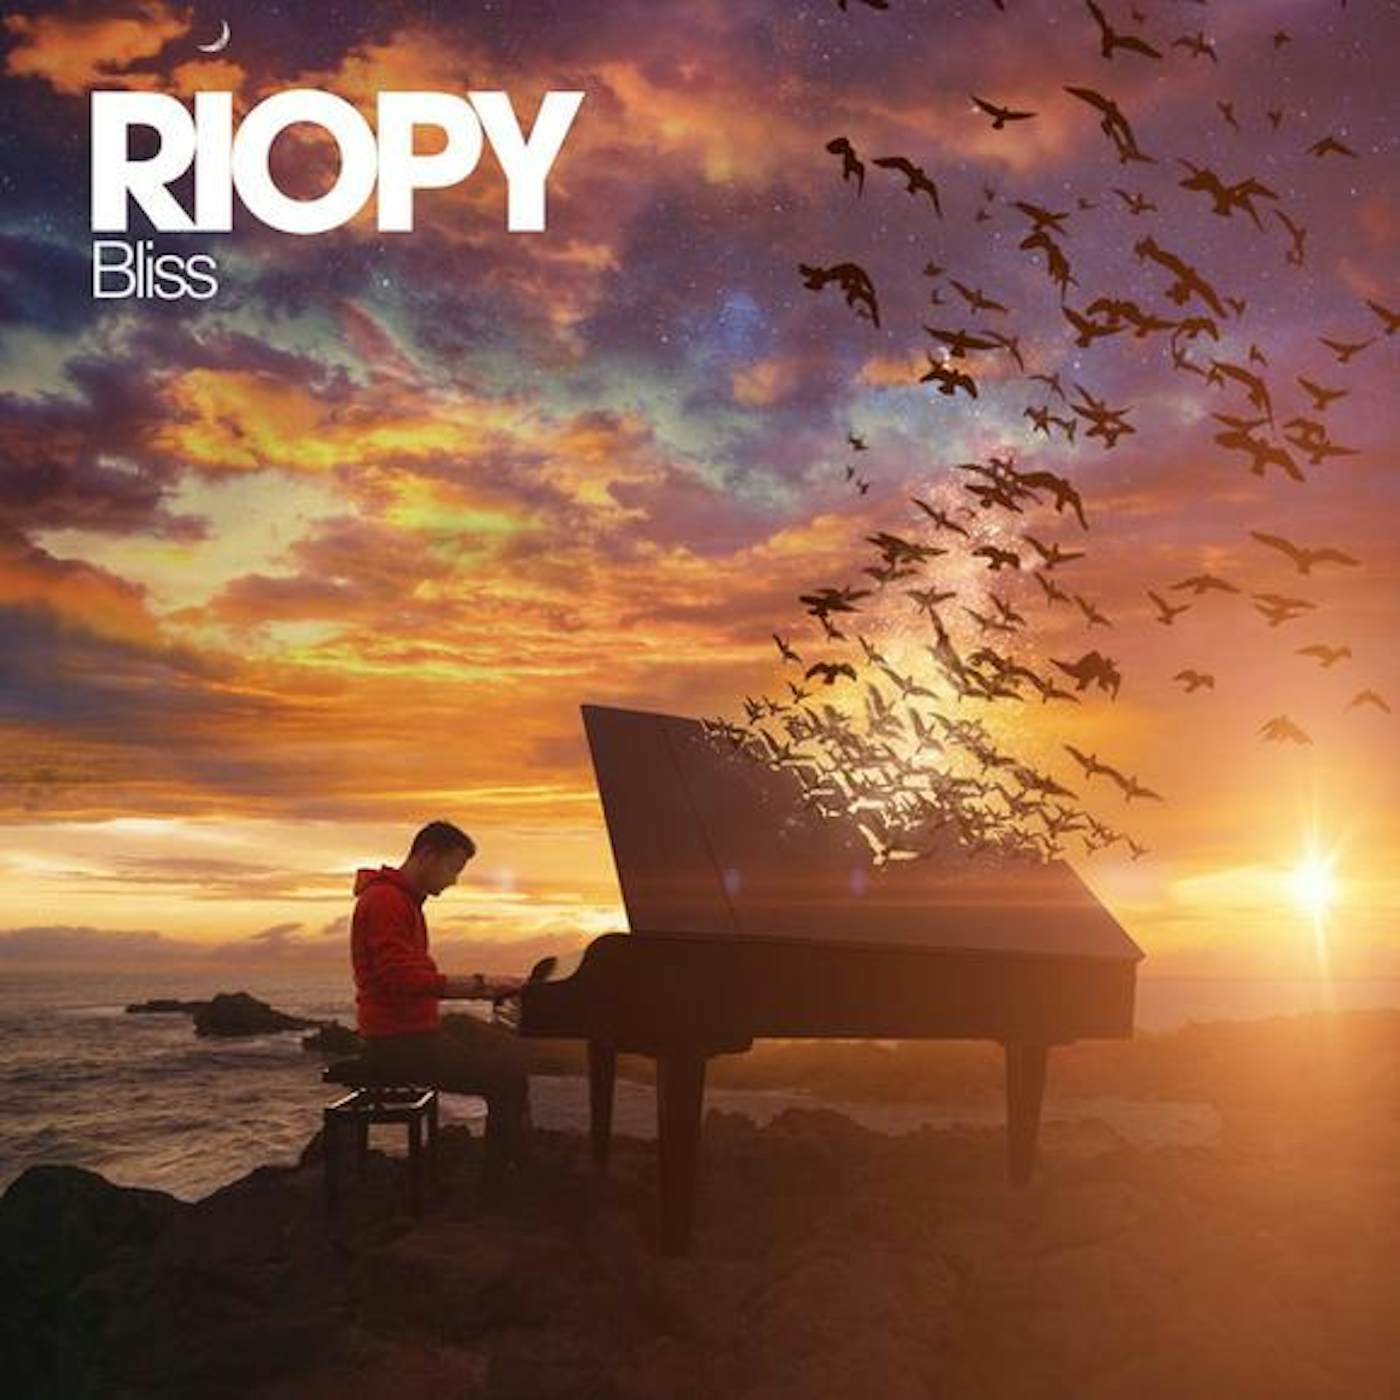 RIOPY Bliss Vinyl Record